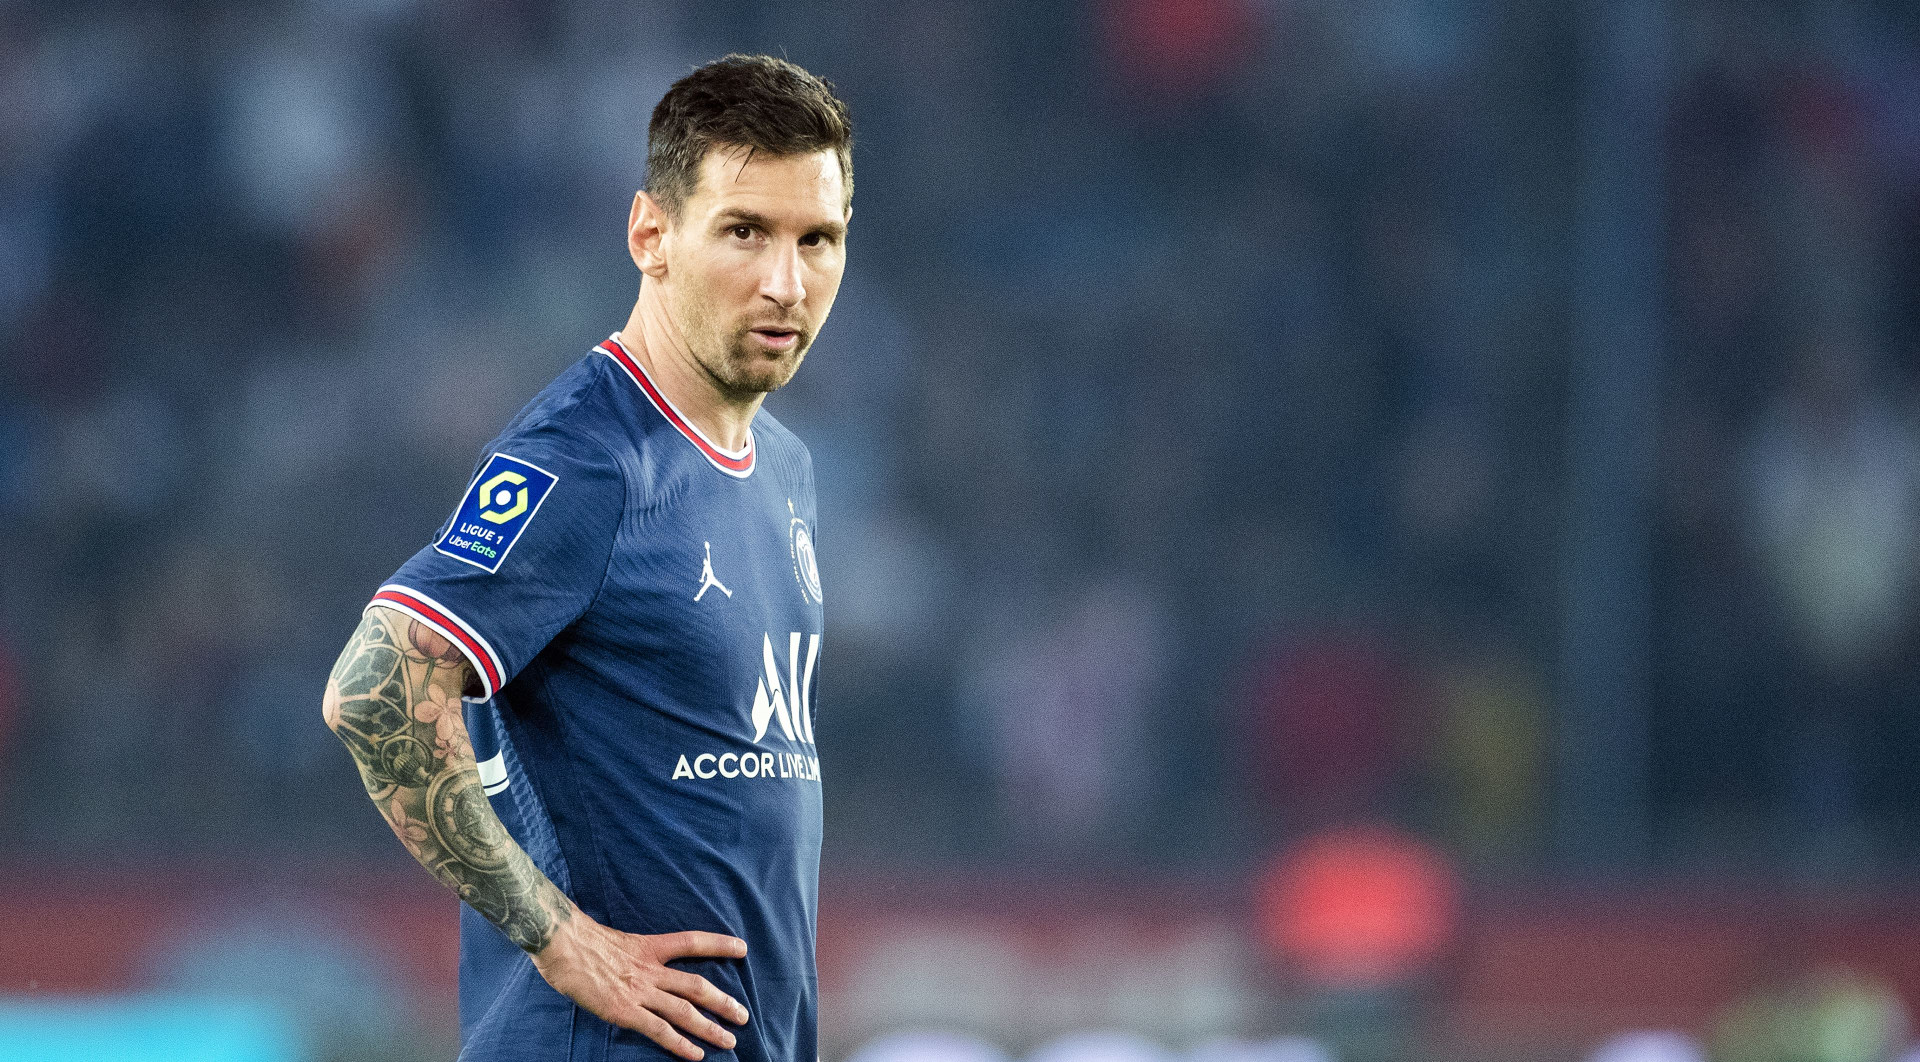 Lionel Messi začne druhý rok v Paris Saint-Germain. V tom prvním oslňoval zejména komerčními úspěchy.